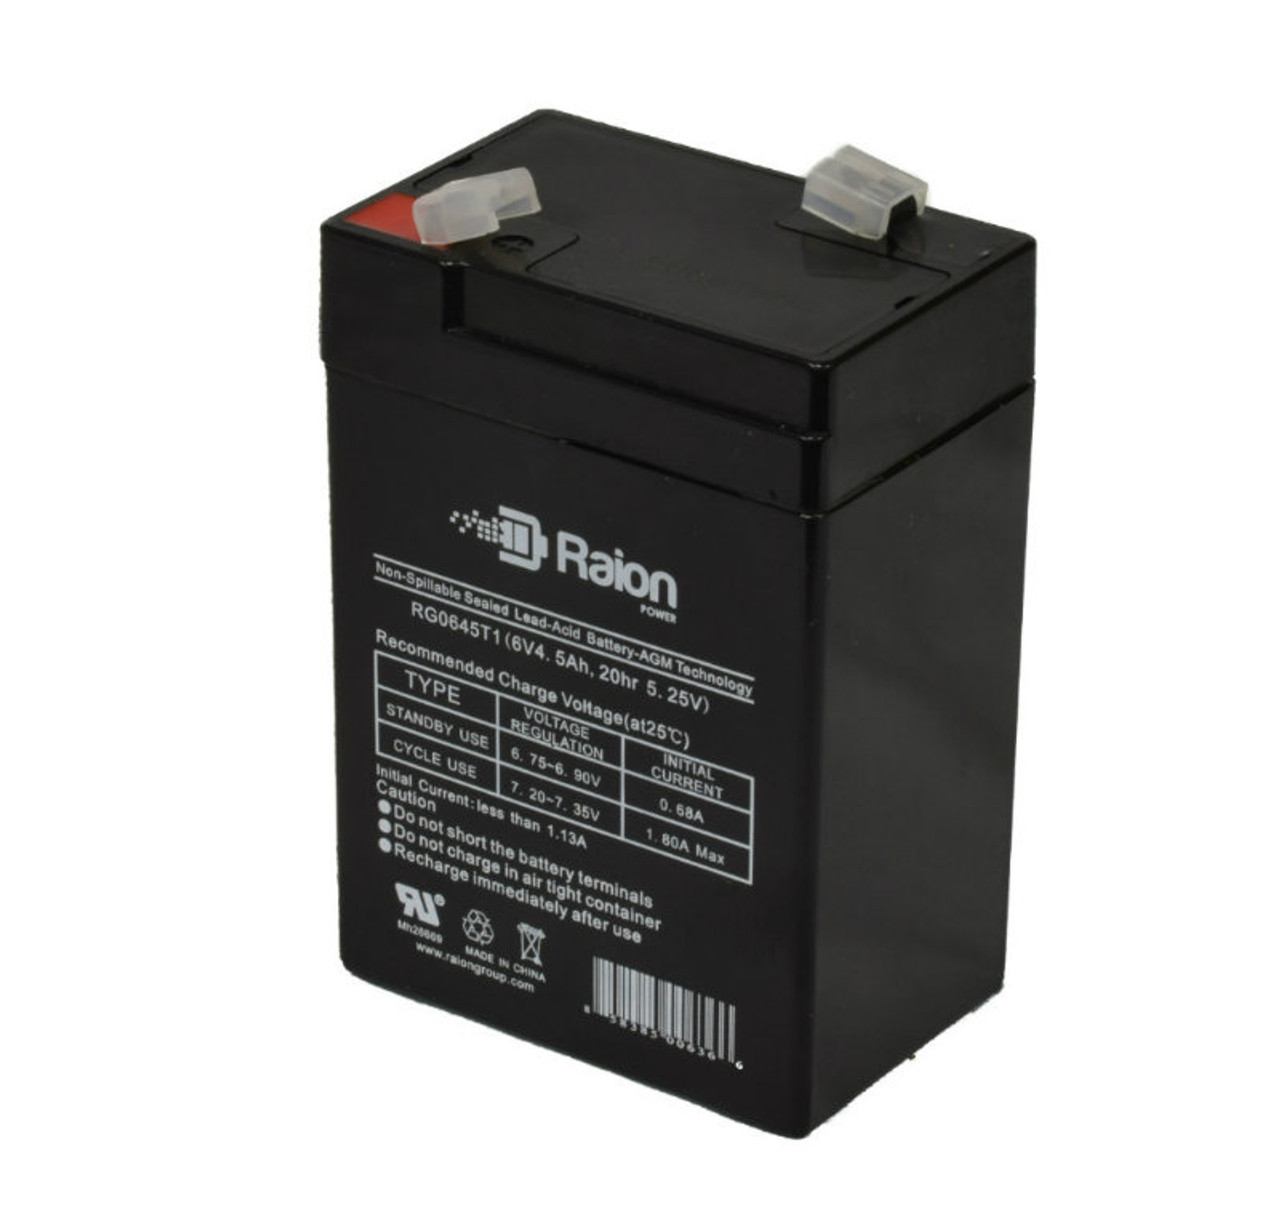 Raion Power RG0645T1 6V 4.5Ah Replacement Battery Cartridge for Emergi-Lite 80017